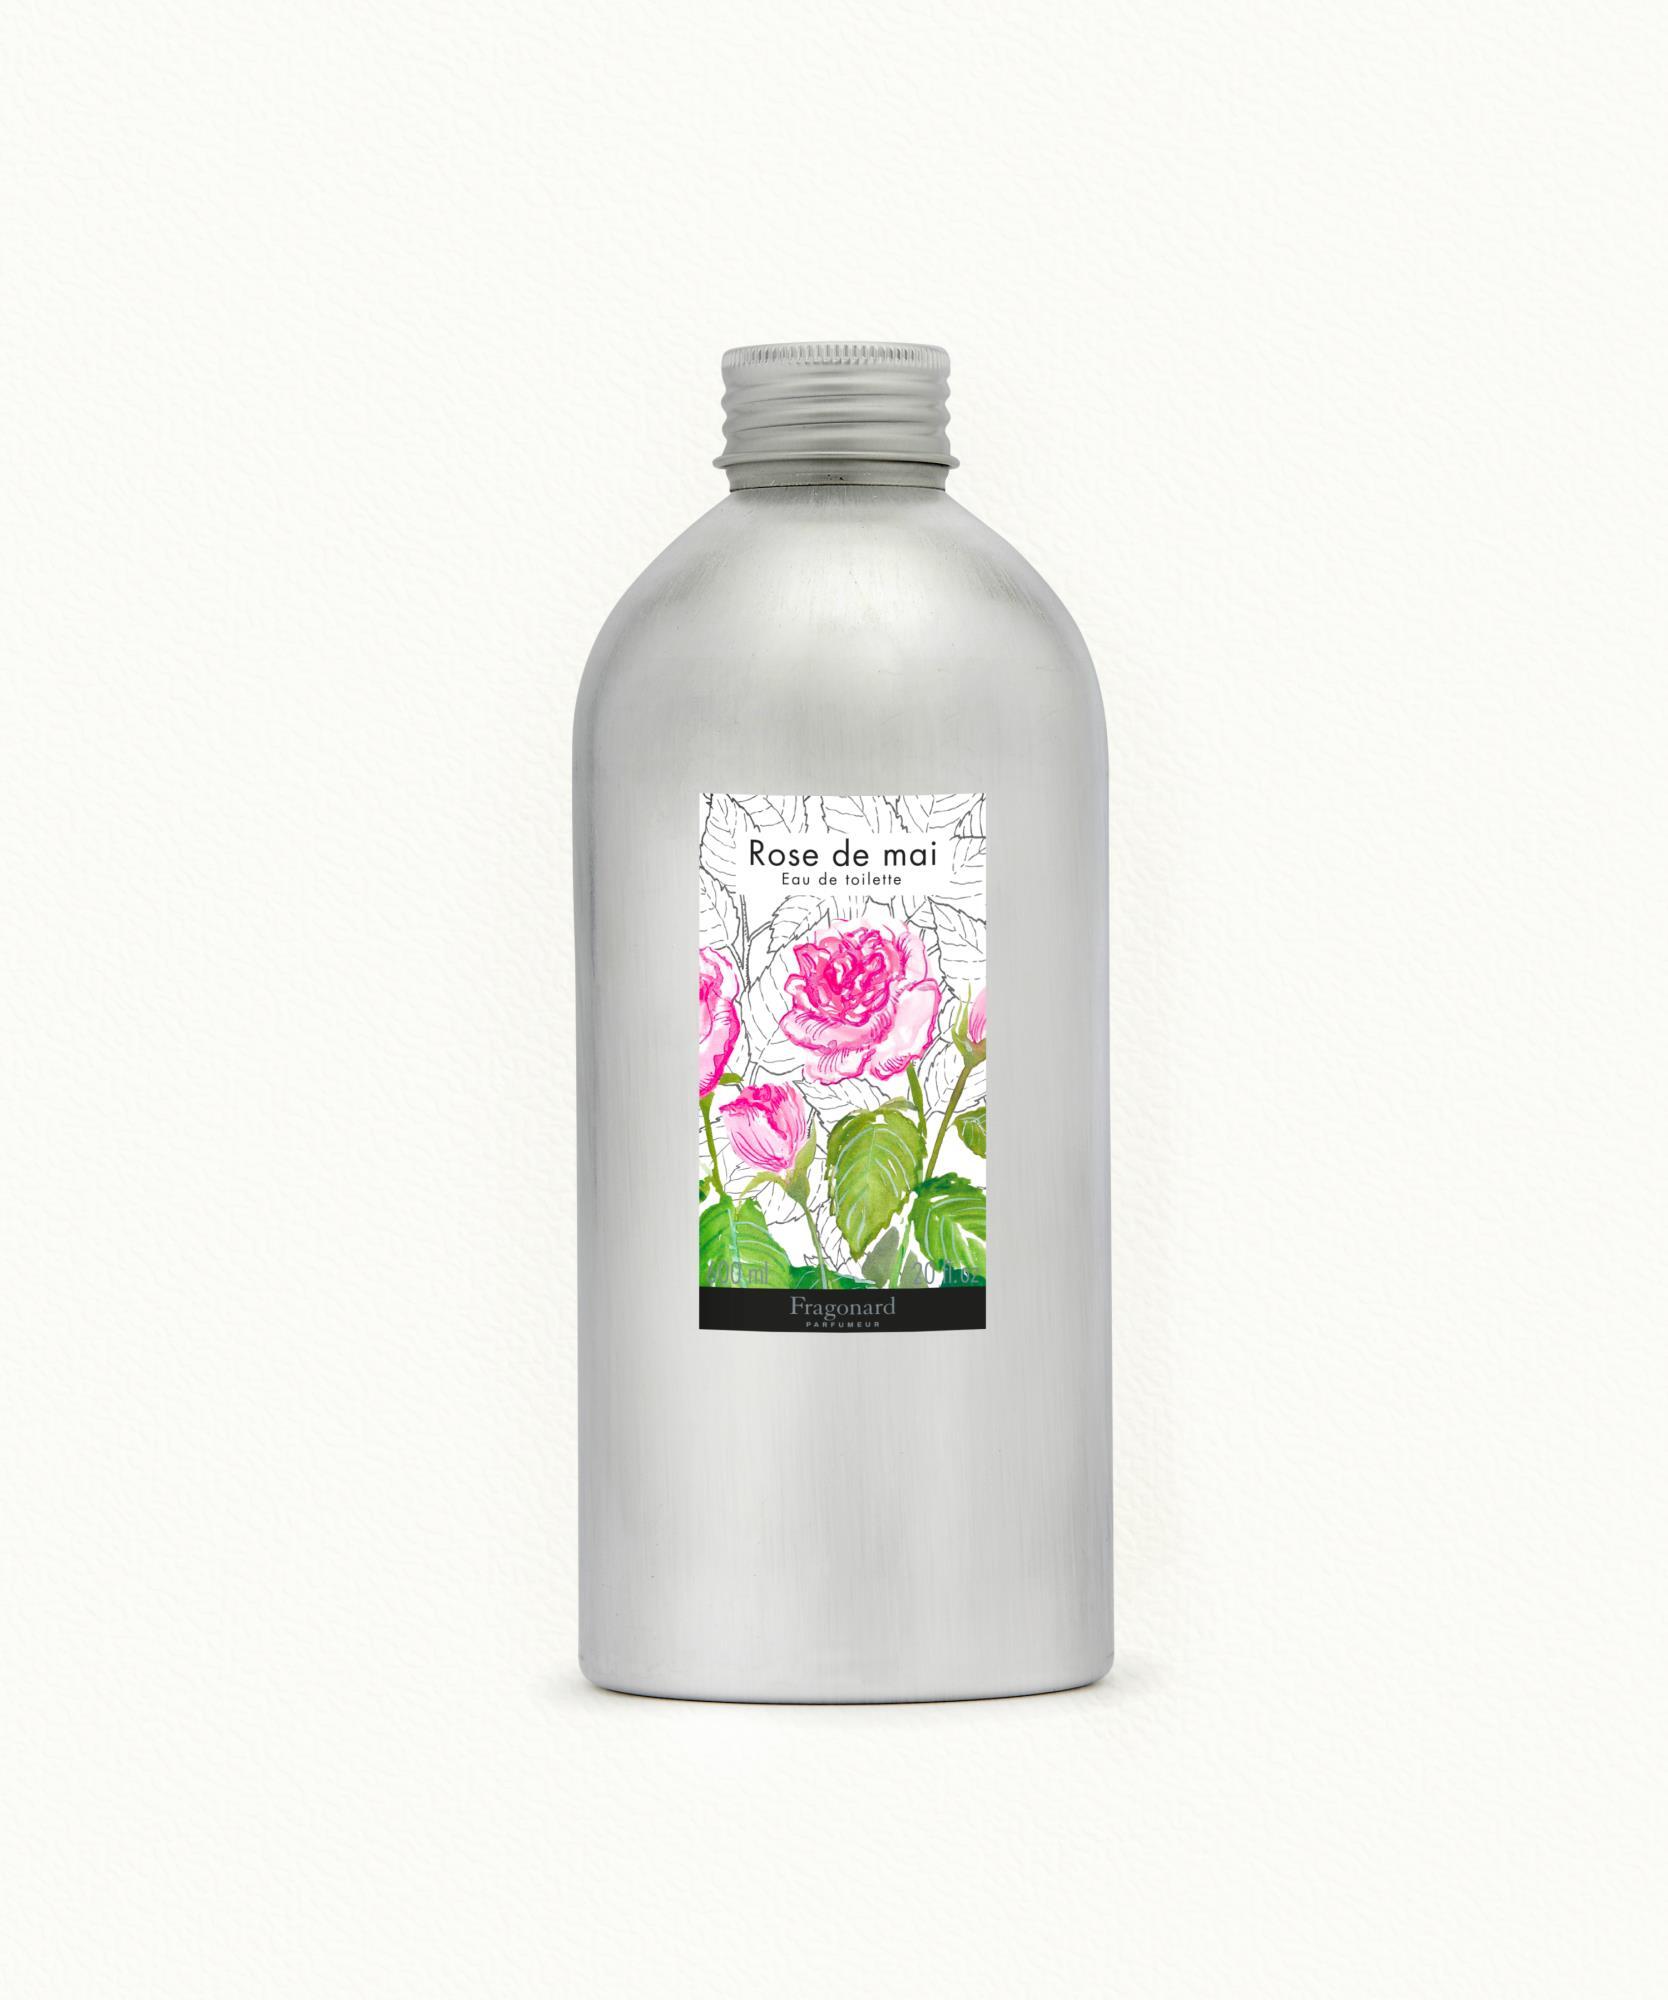 Rose de Mai (May Rose) Eau de toilette 600ml Fragonard - 75,00 €